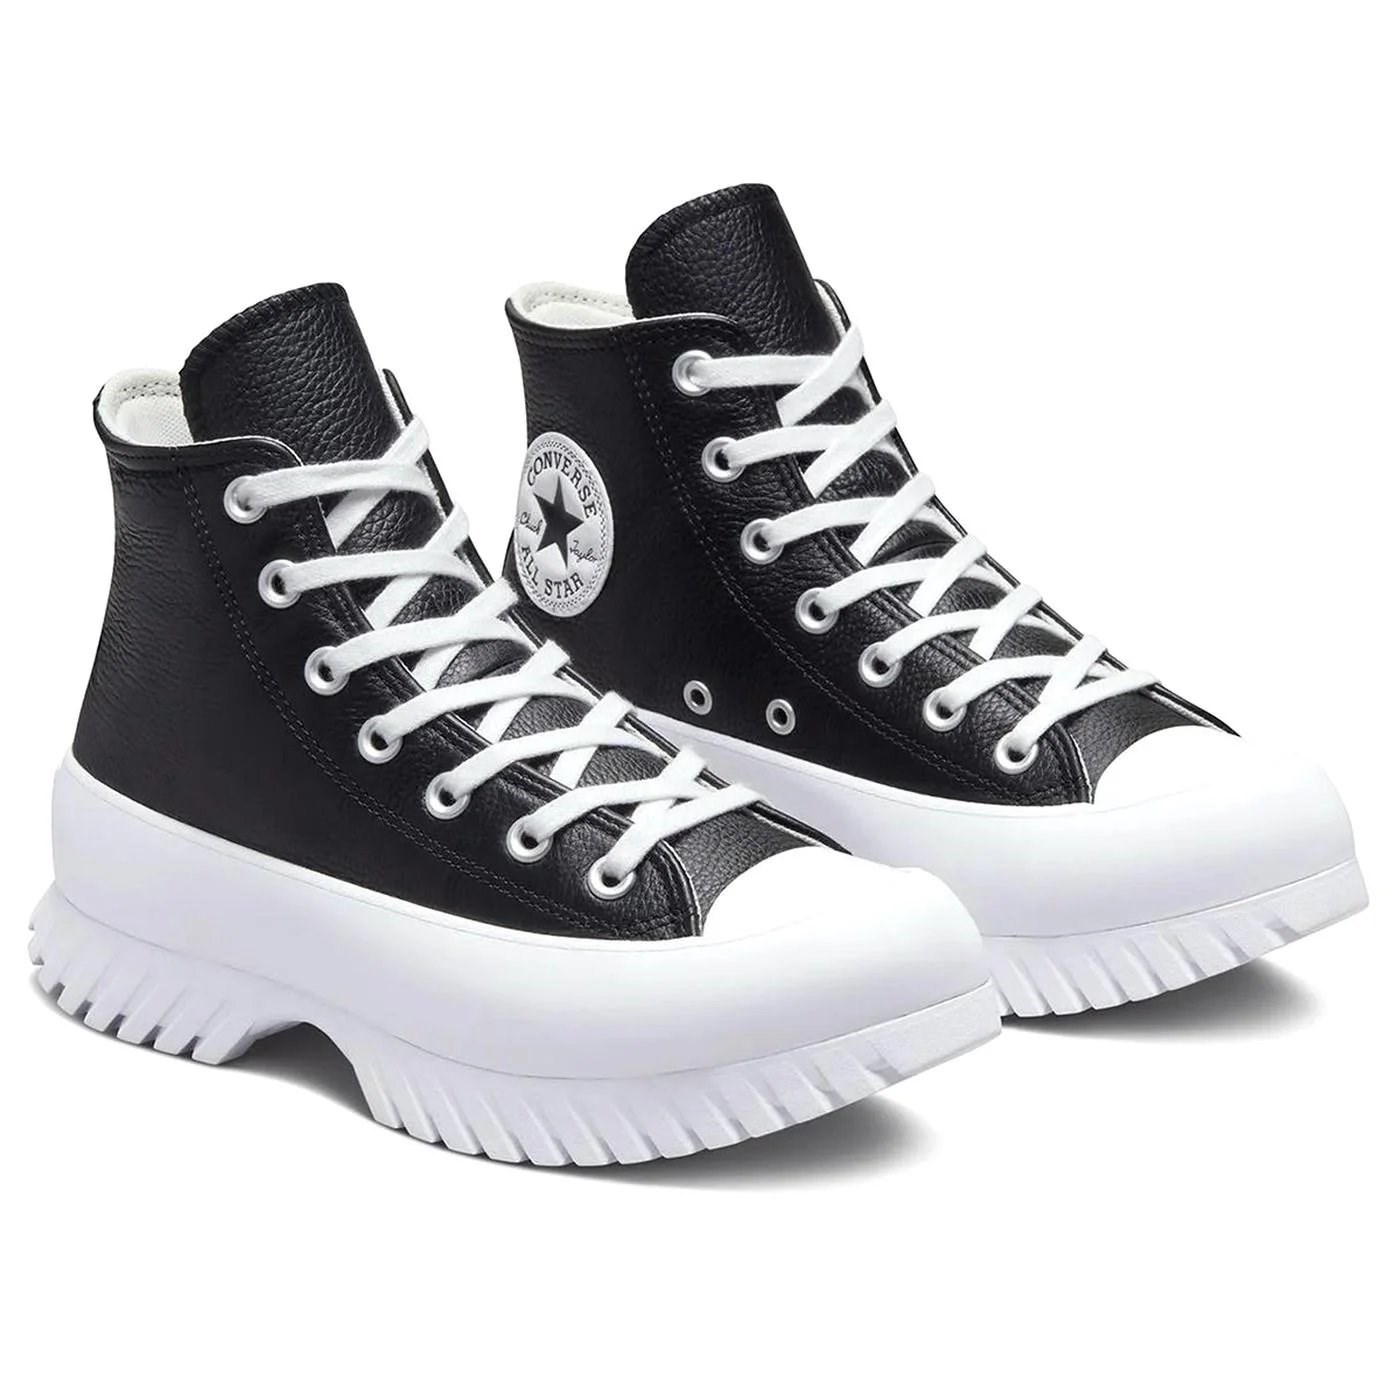 Converse Chuck Taylor All Star Lugged 2.0 Leather Kadın Sneaker Ayakkabı Siyah